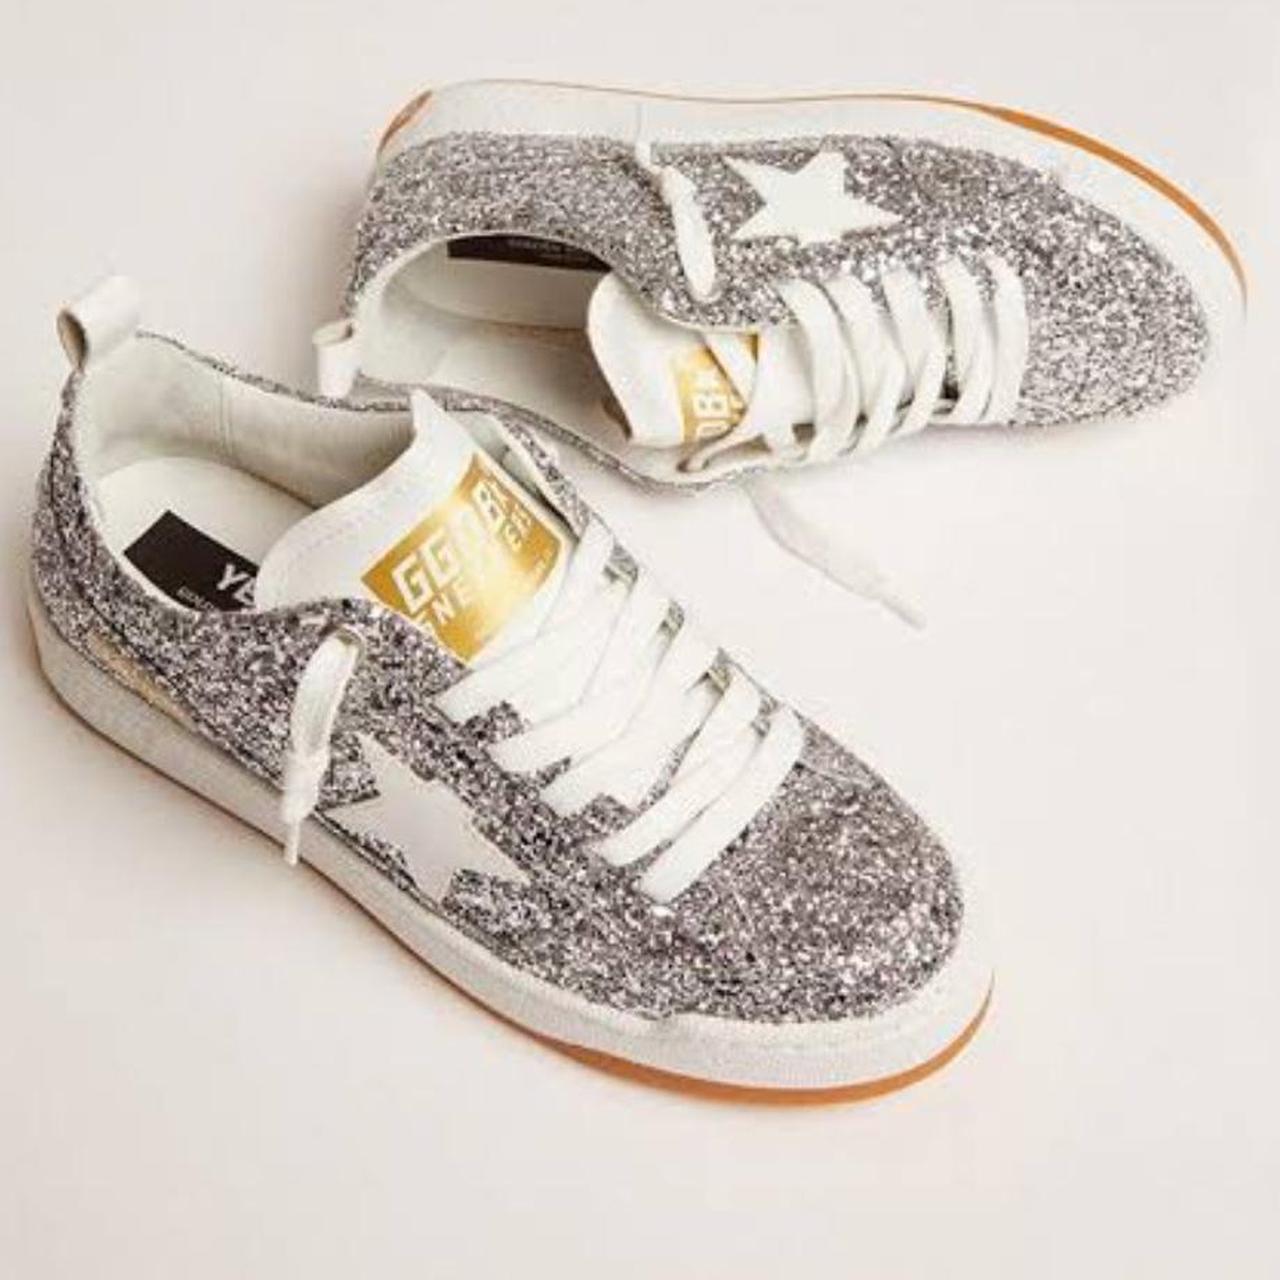 YEAH Golden Goose silver sparkly sneakers Great... - Depop